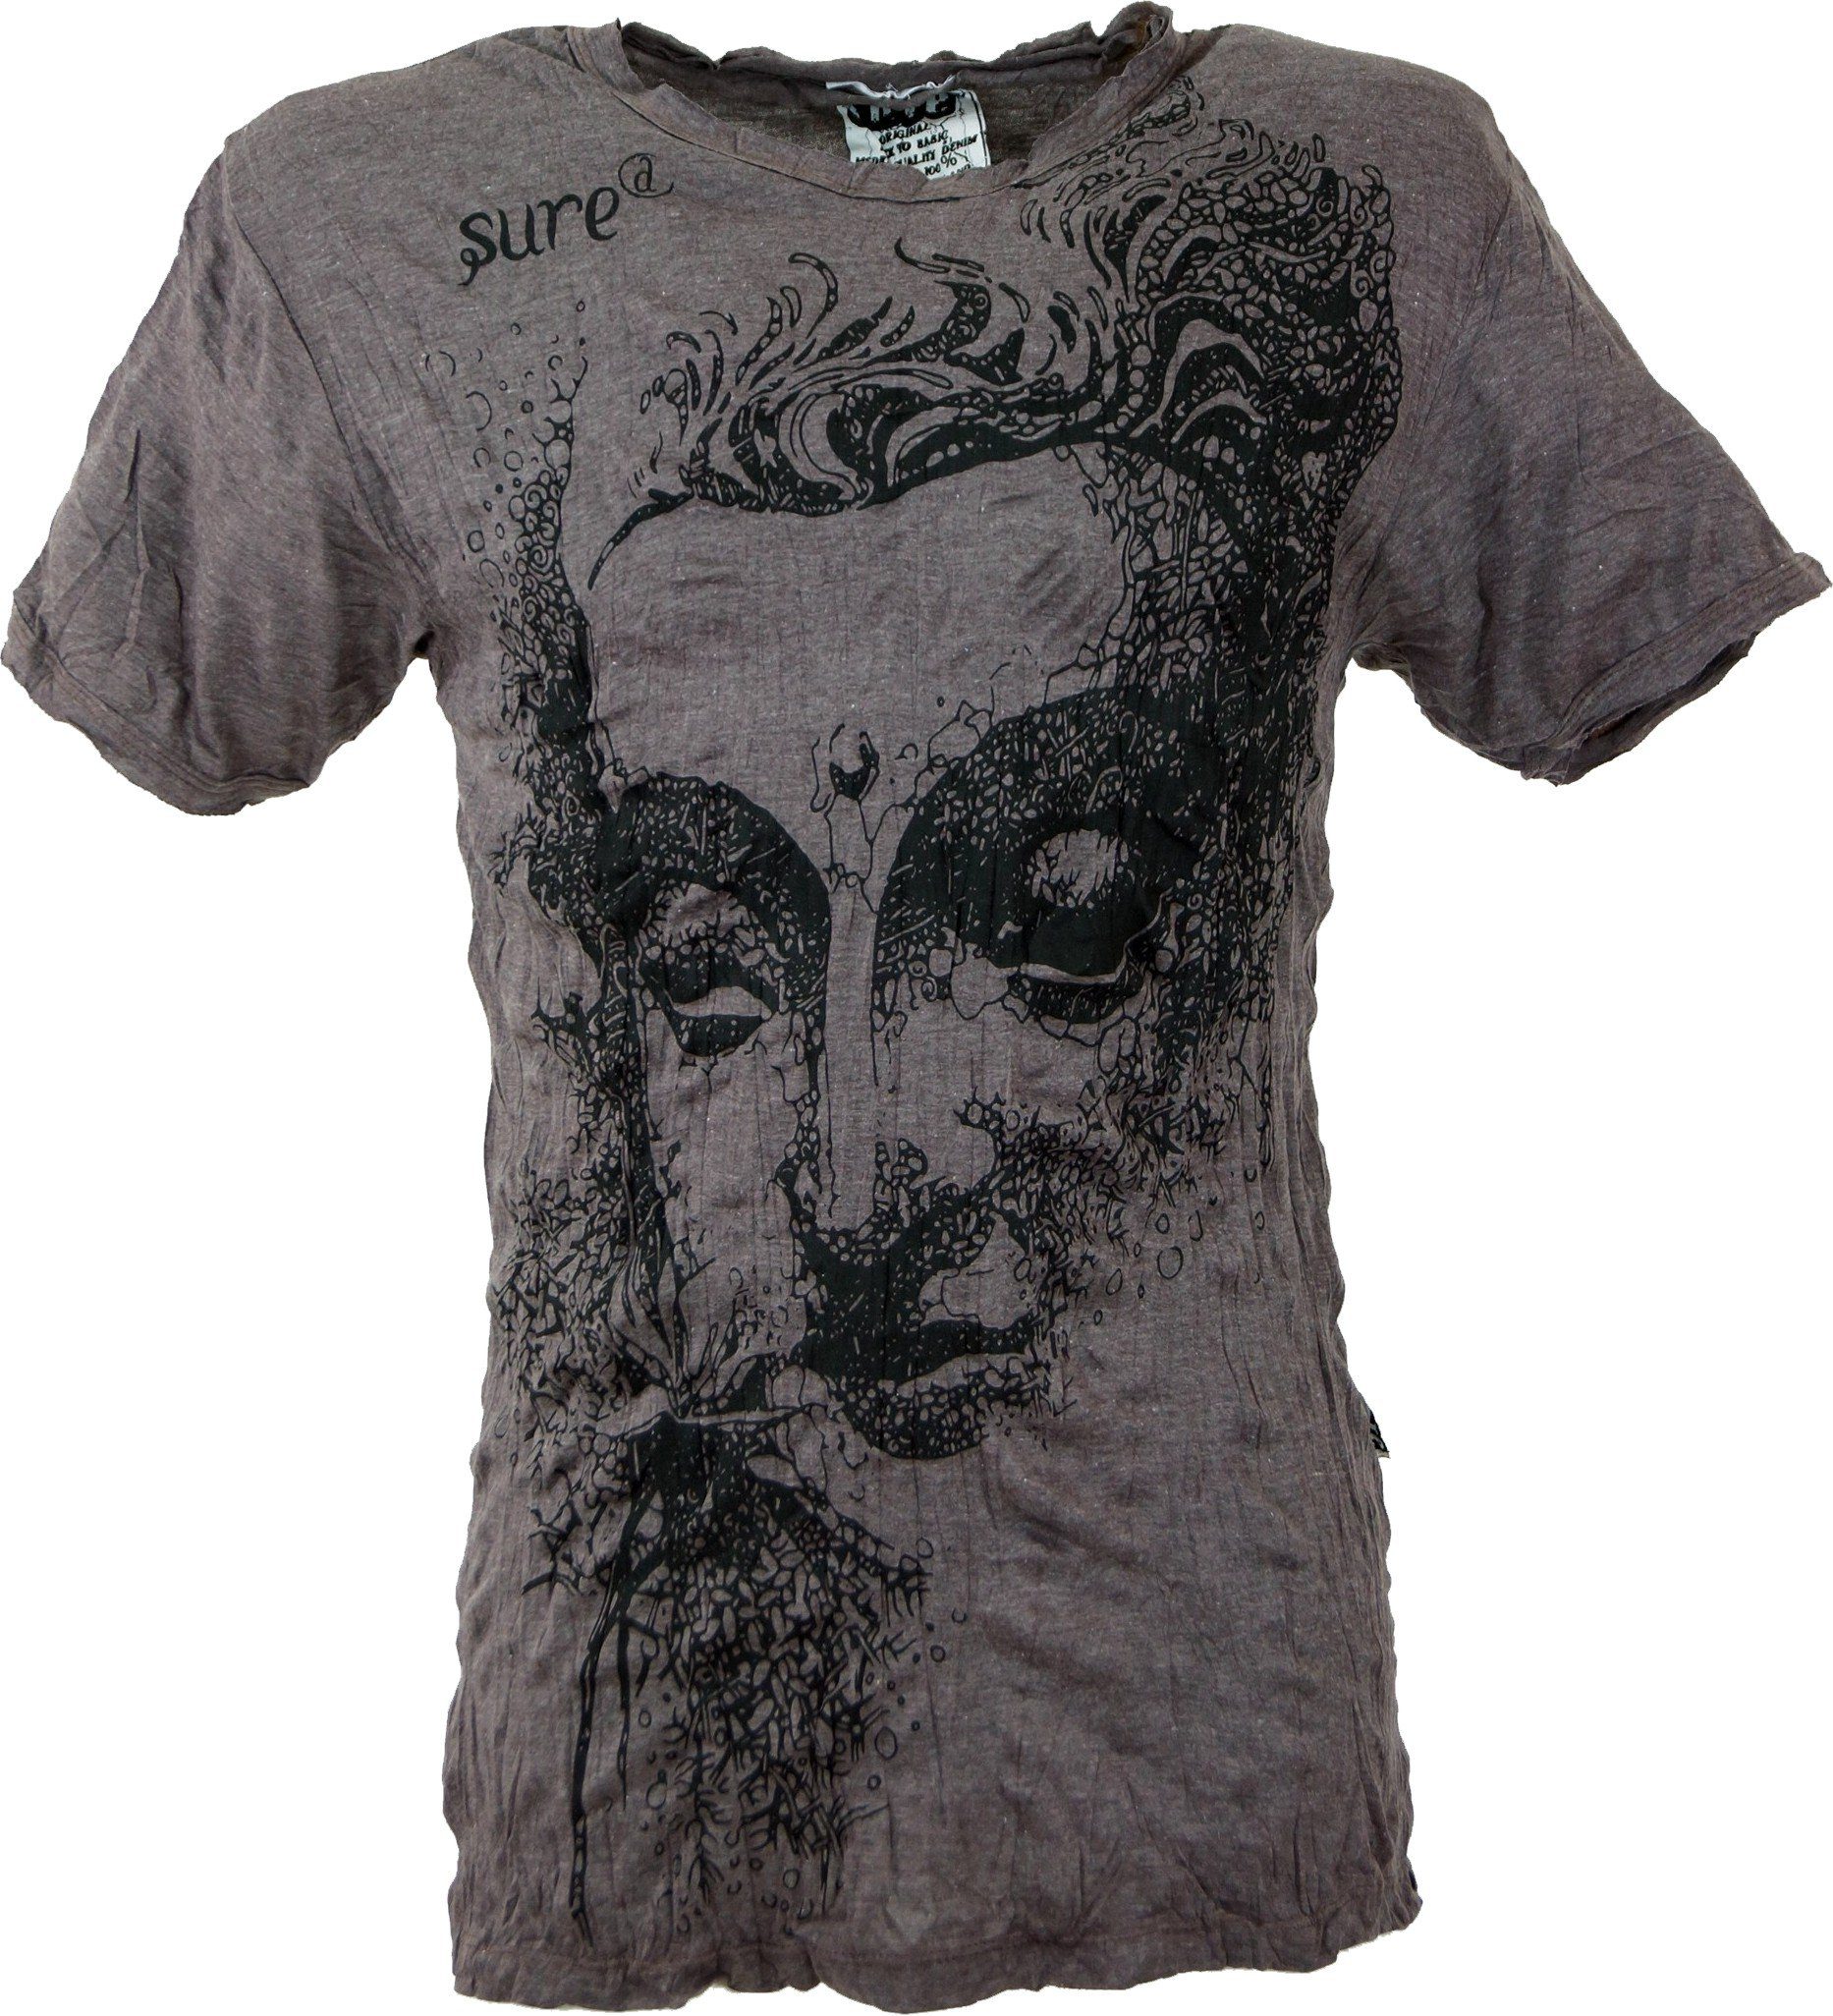 Guru-Shop - T-Shirt Bekleidung Sure Goa T-Shirt Style, Buddha Festival, coffee alternative